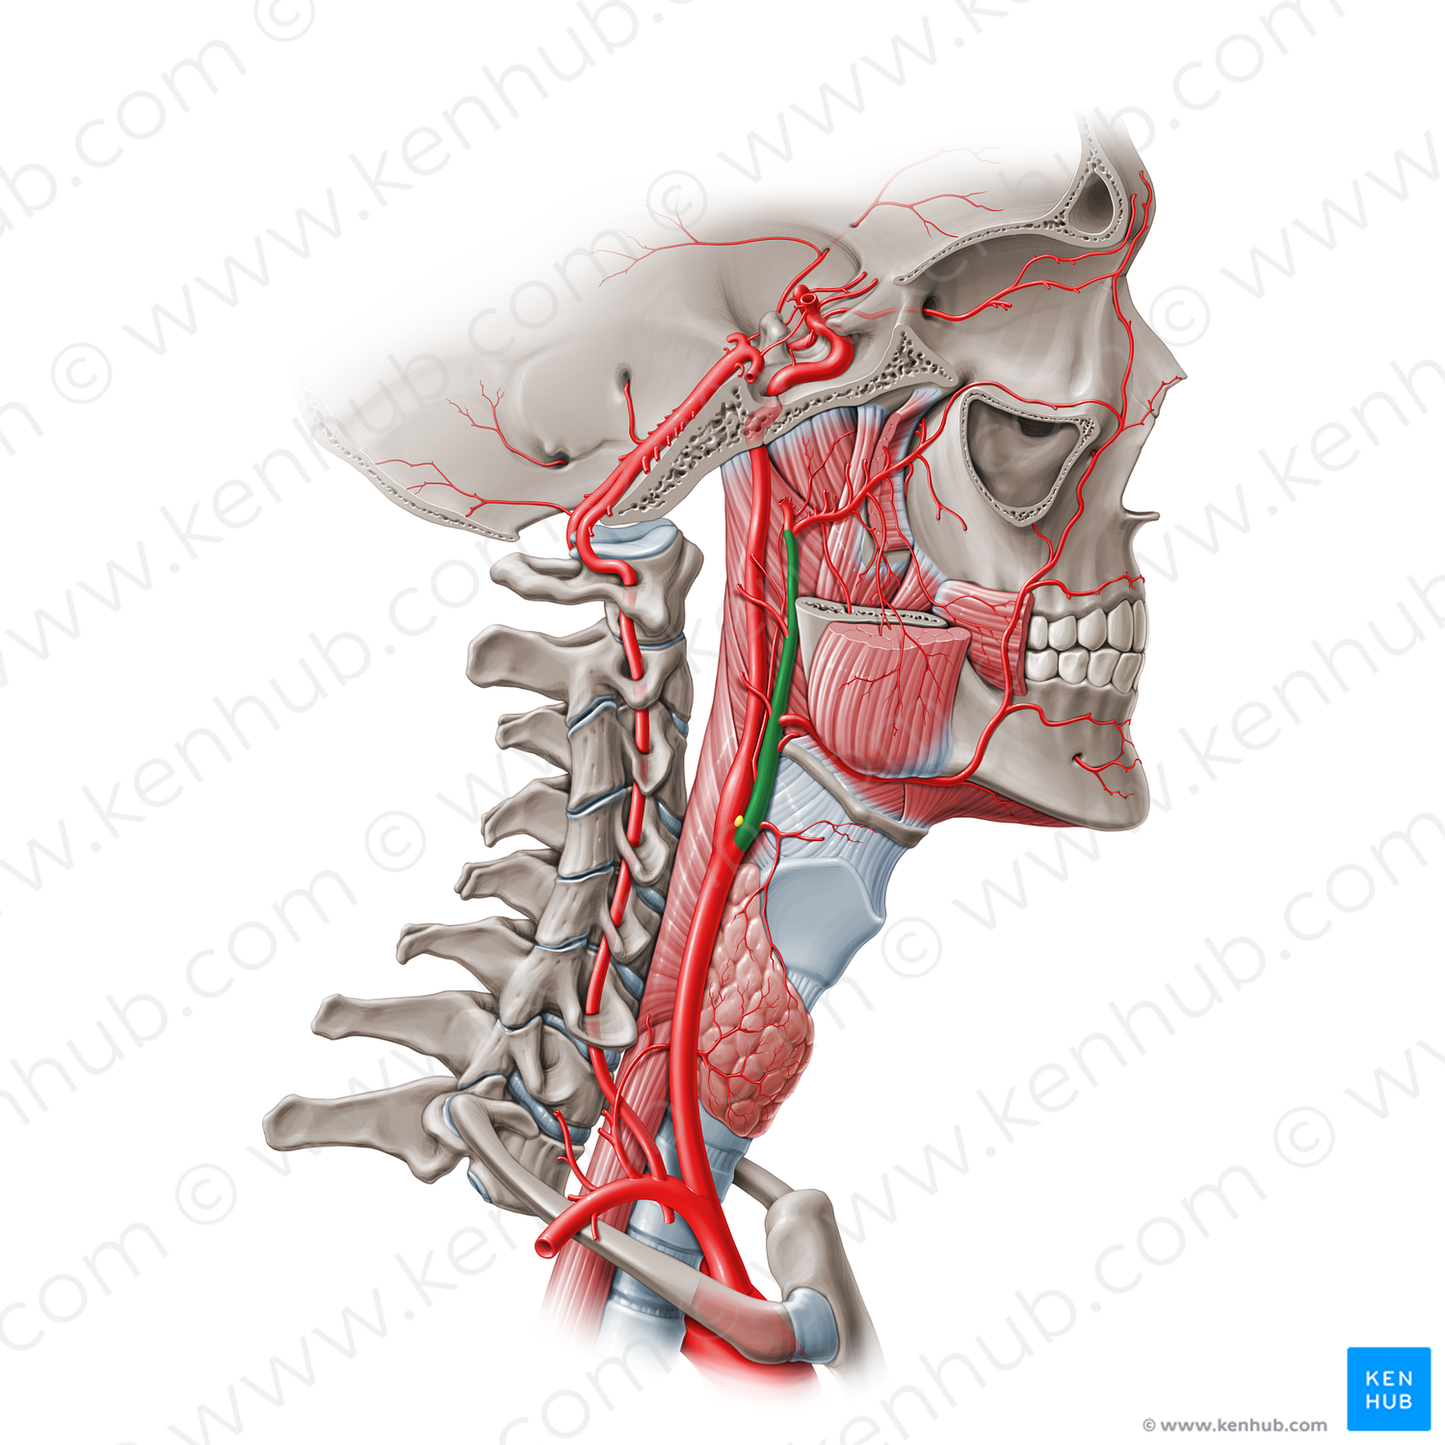 External carotid artery (#960)